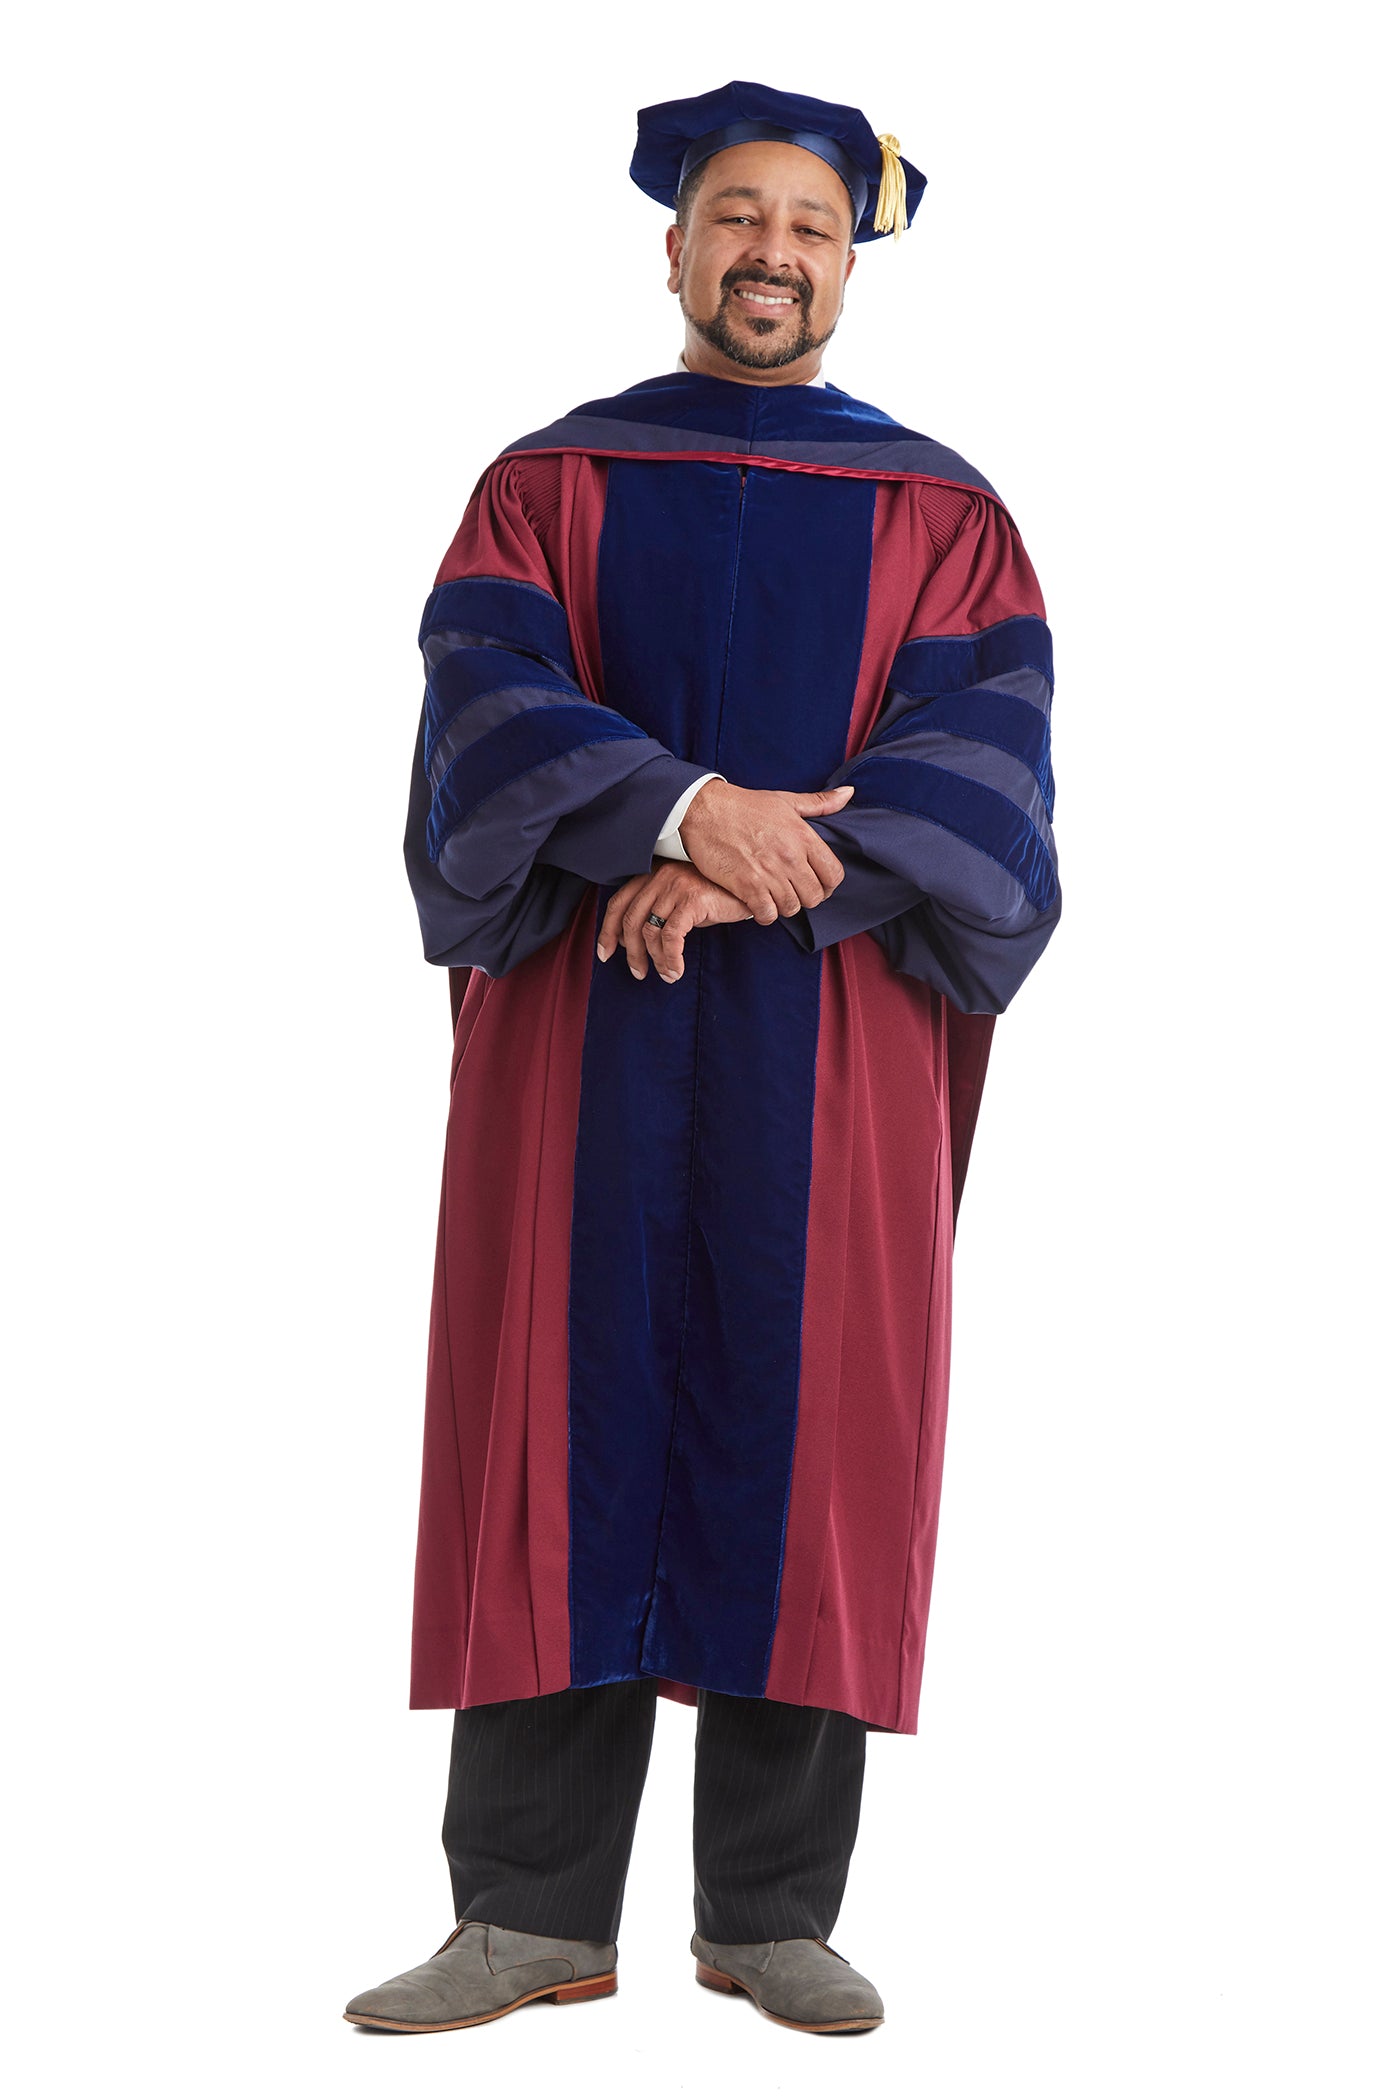 University of Pennsylvania Doctoral Regalia Rental Set. Doctoral Gown, Hood, and Cap / Tam with Tassel